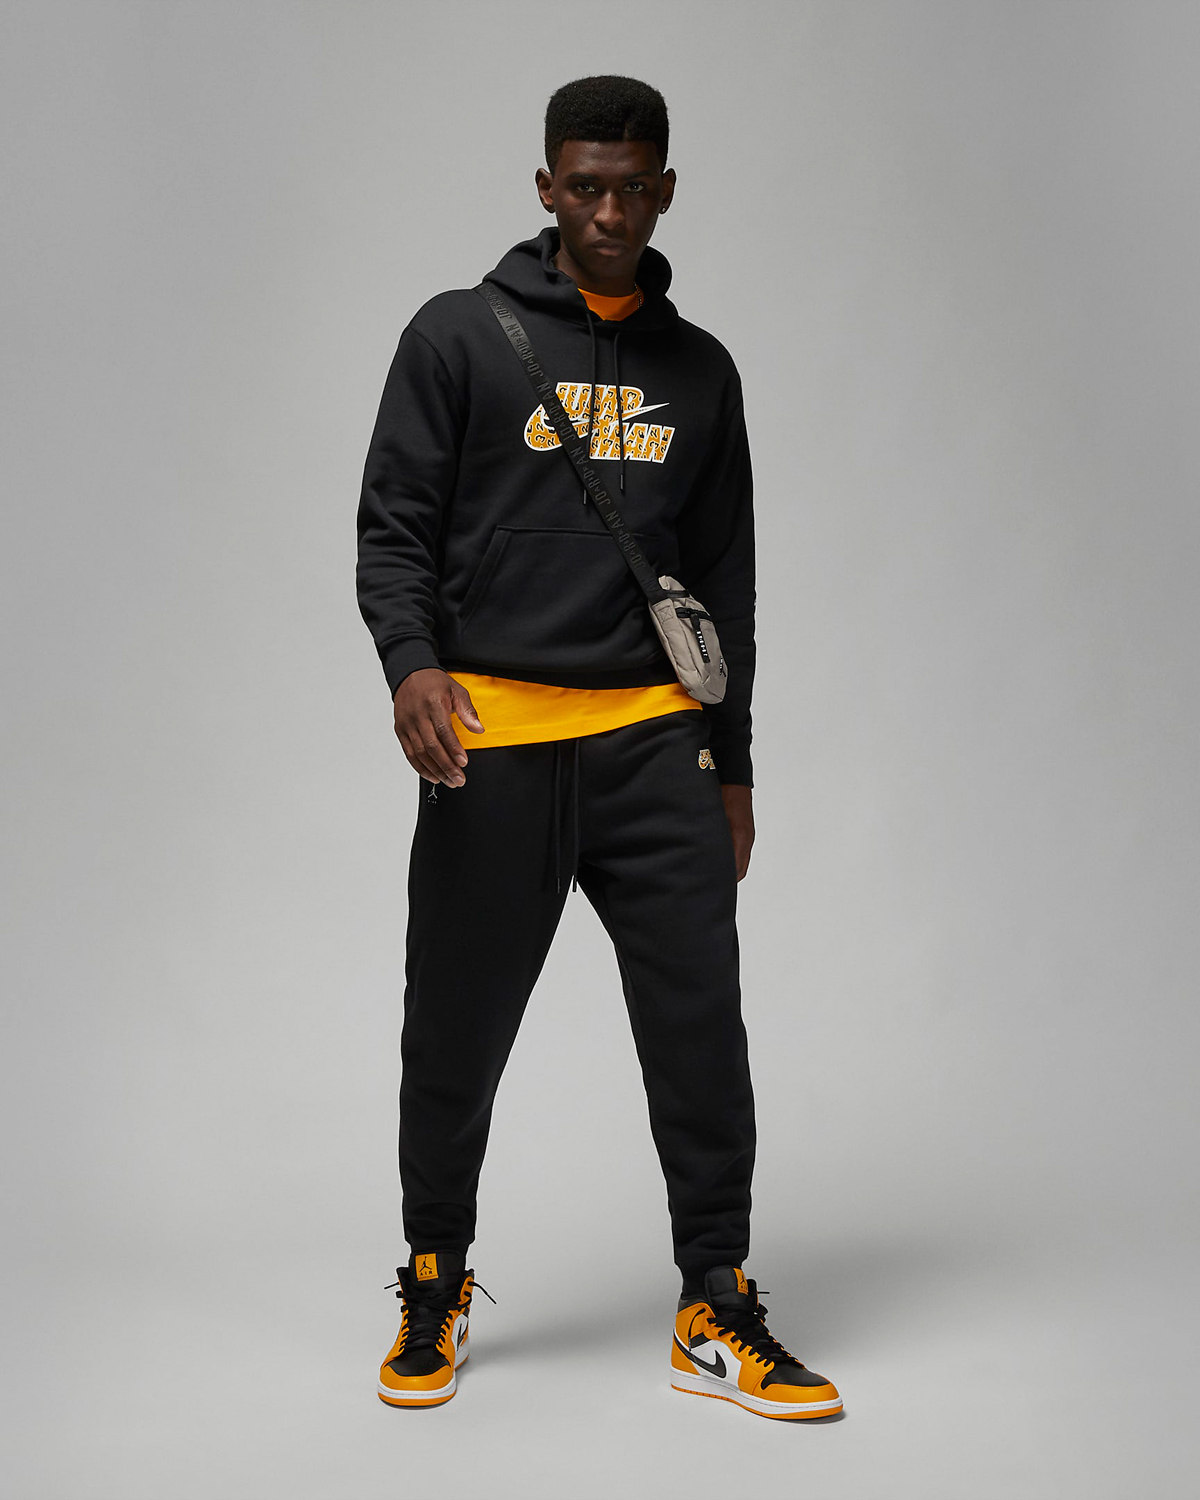 Jordan Flight MVP Cheetah Print Clothing Jersey Hoodies Pants